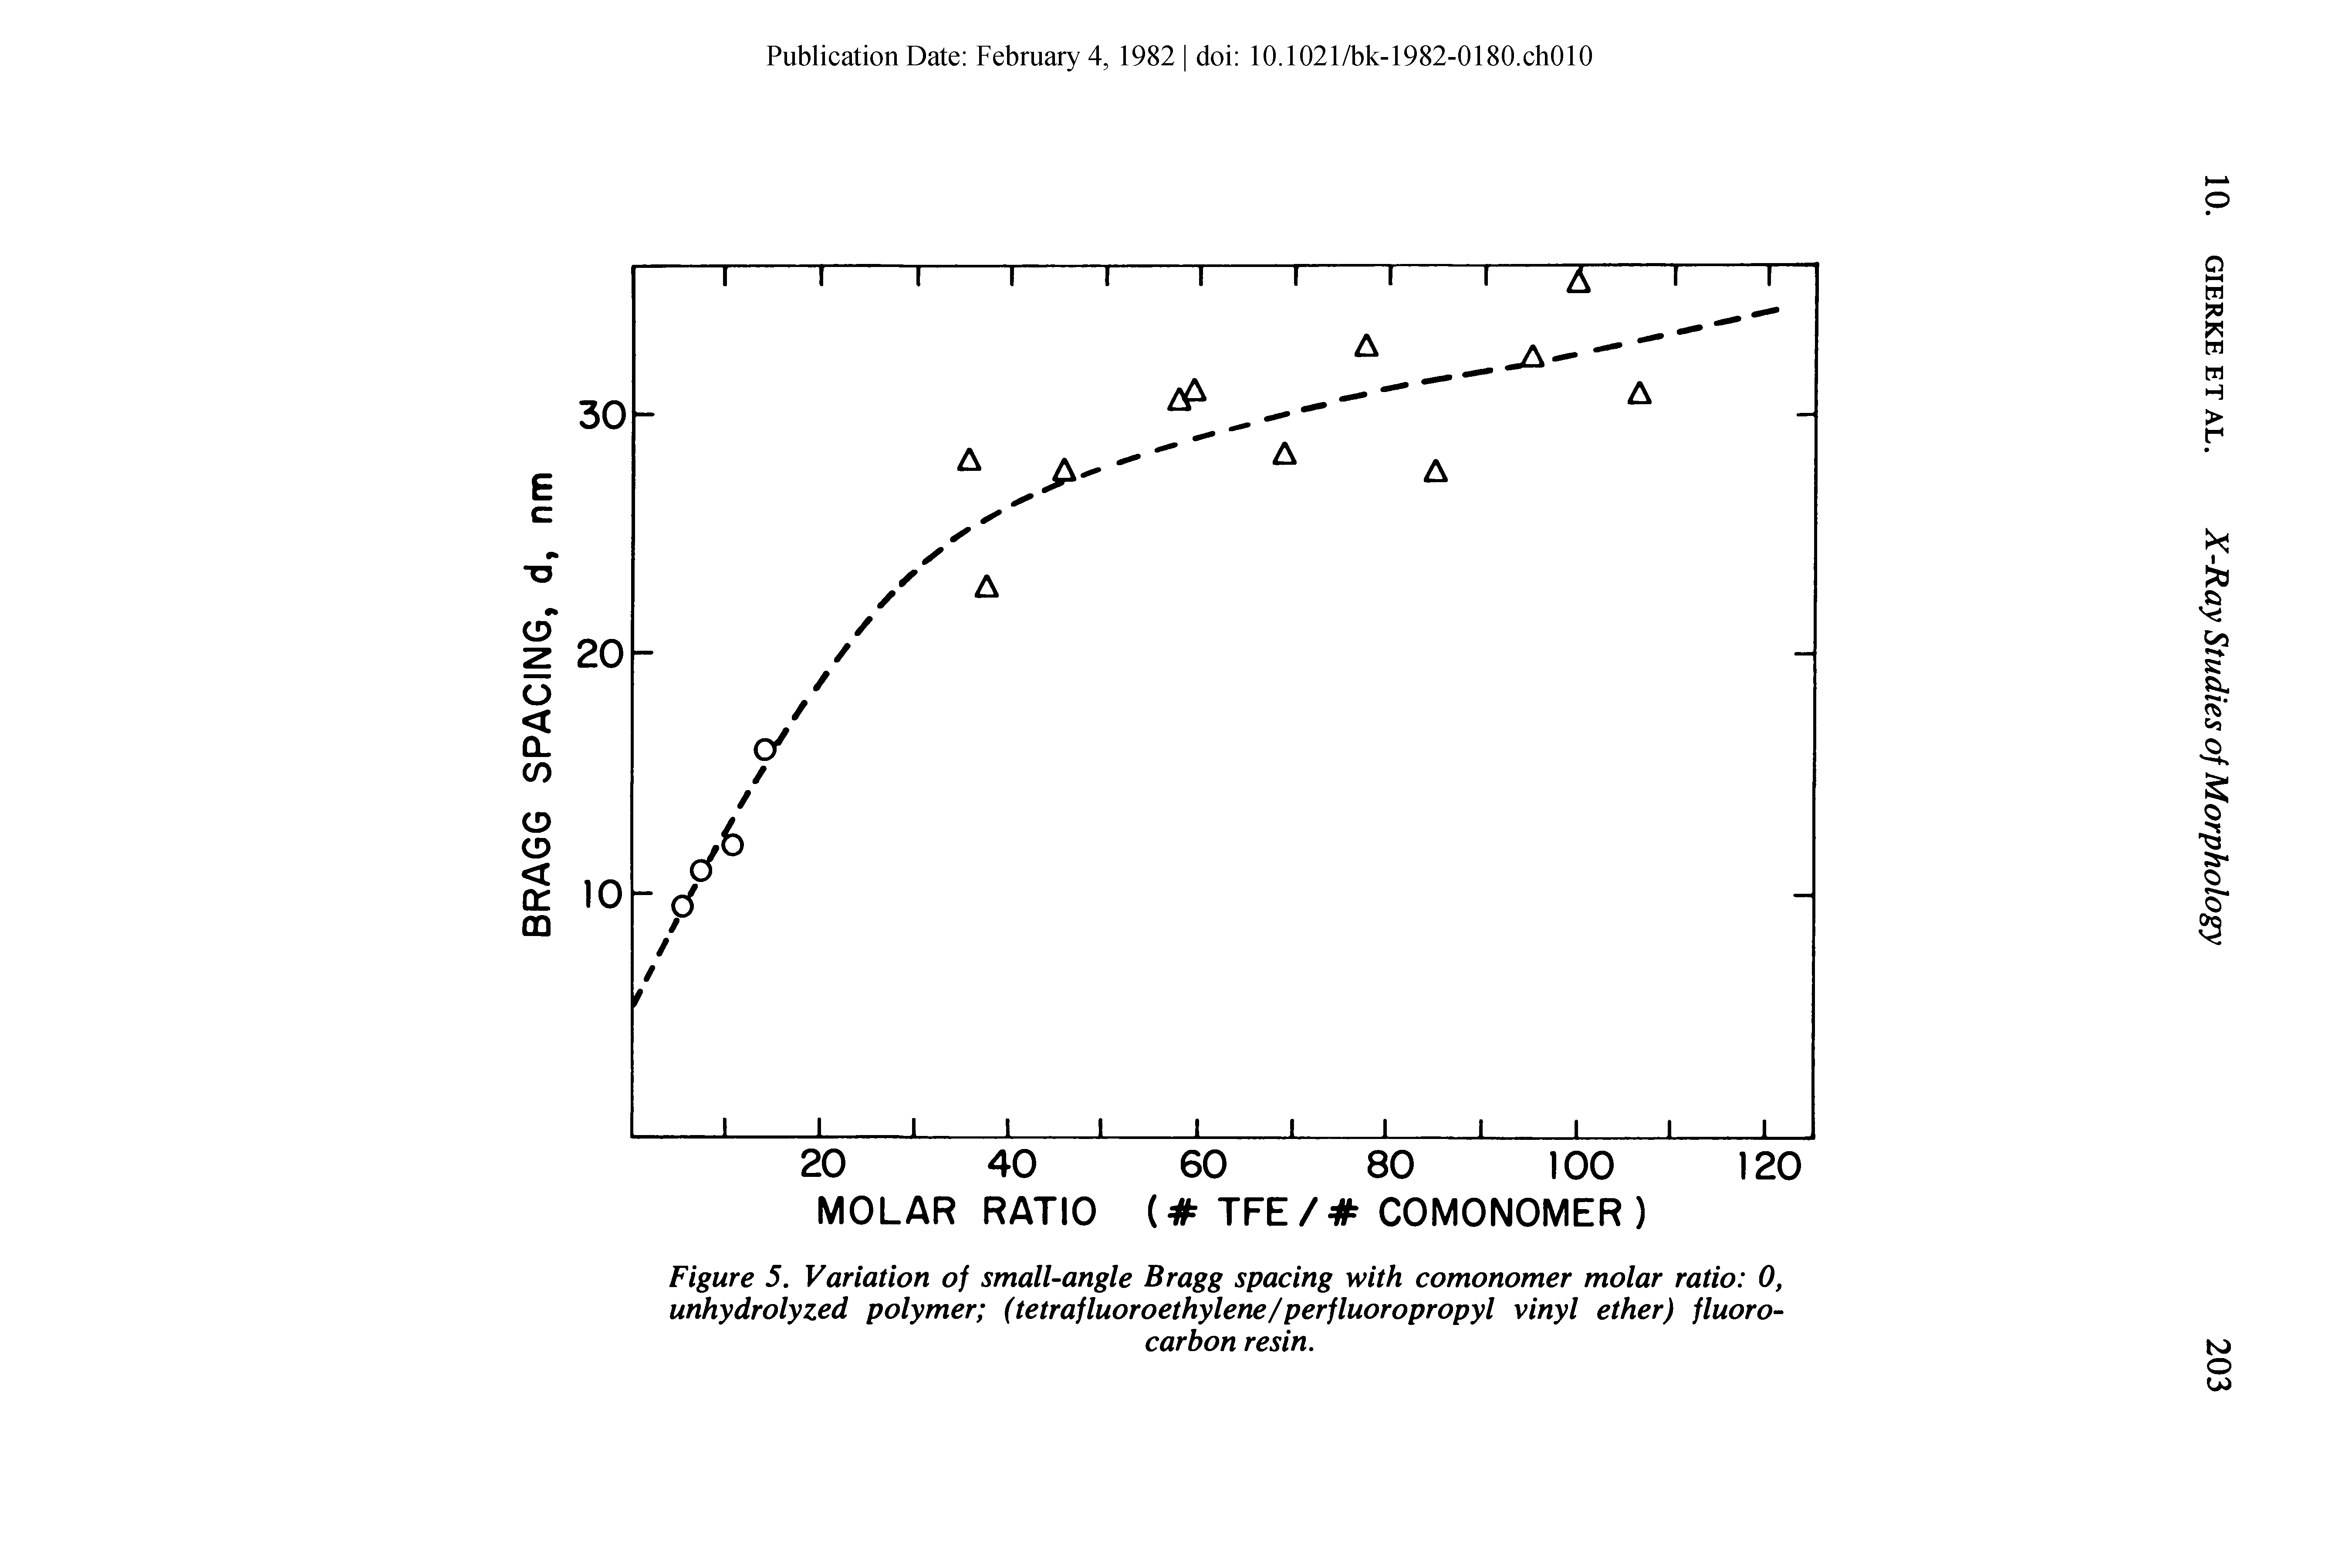 Figure 5. Variation of small-angle Bragg spacing with comonomer molar ratio 0, unhydrolyzed polymer (tetrafluoroethylene/perfluoropropyl vinyl ether) fluorocarbon resin.